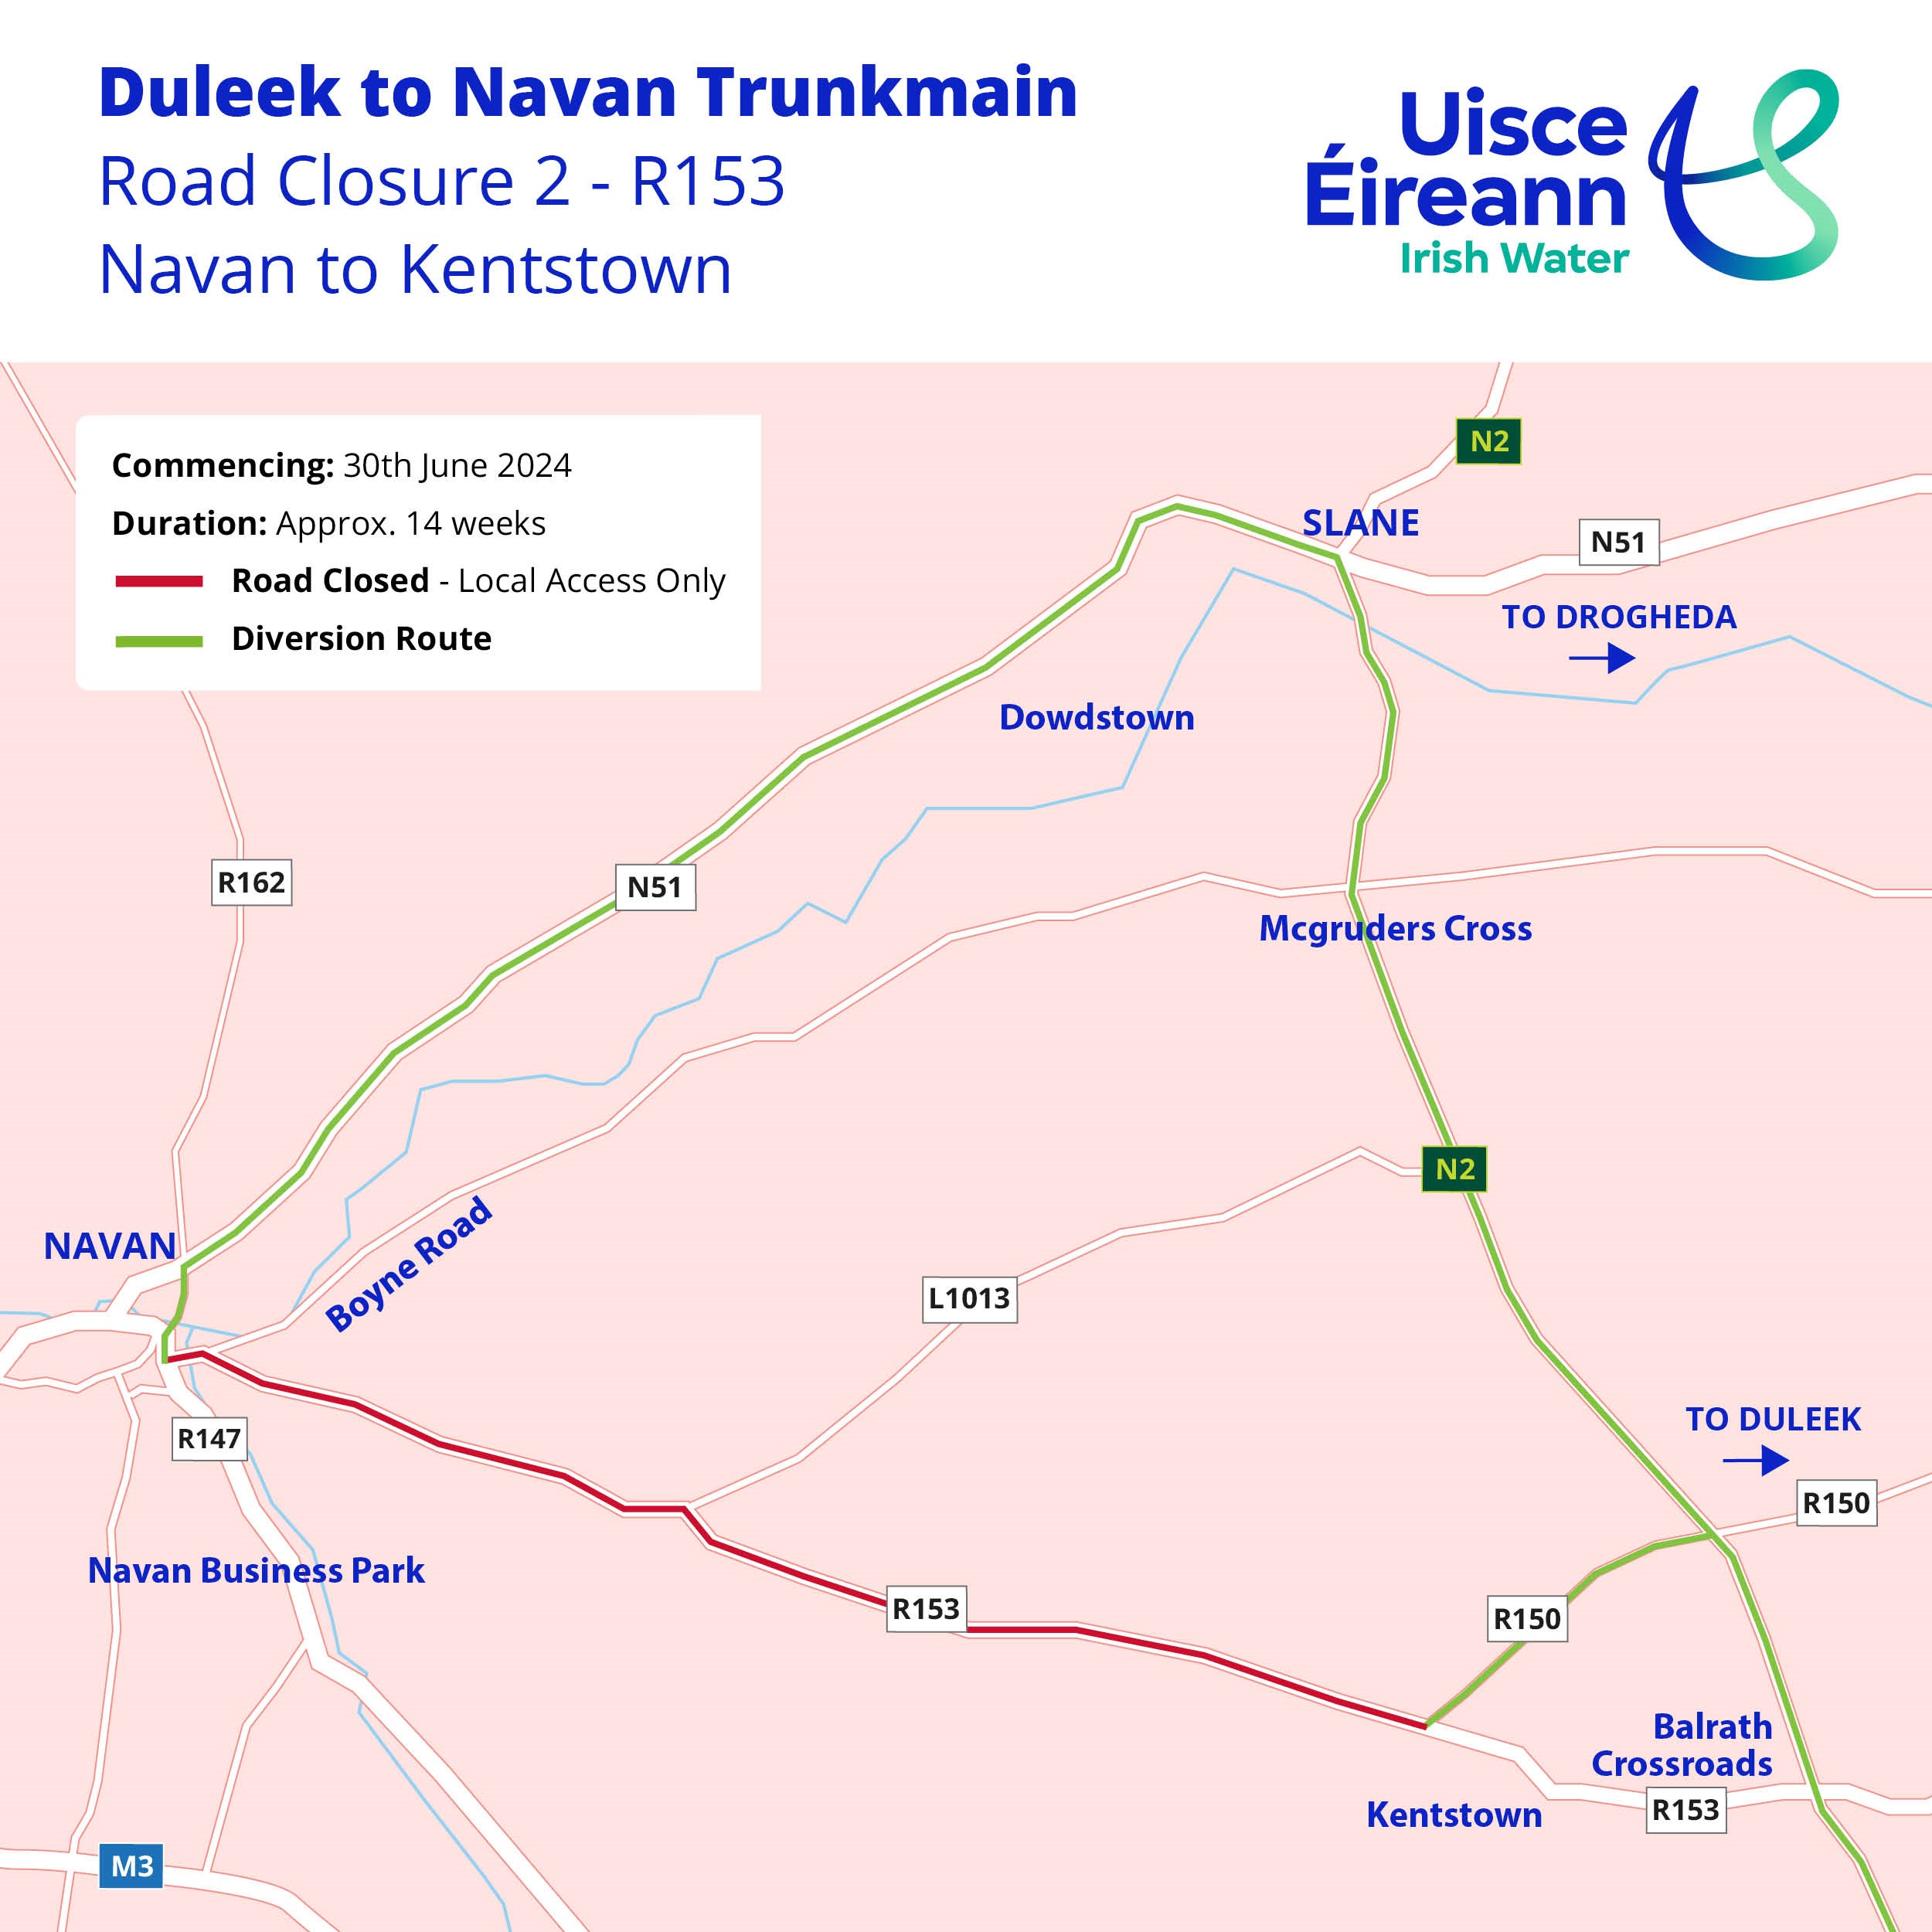 Duleek to Navan Trunkmain Road Closure 2